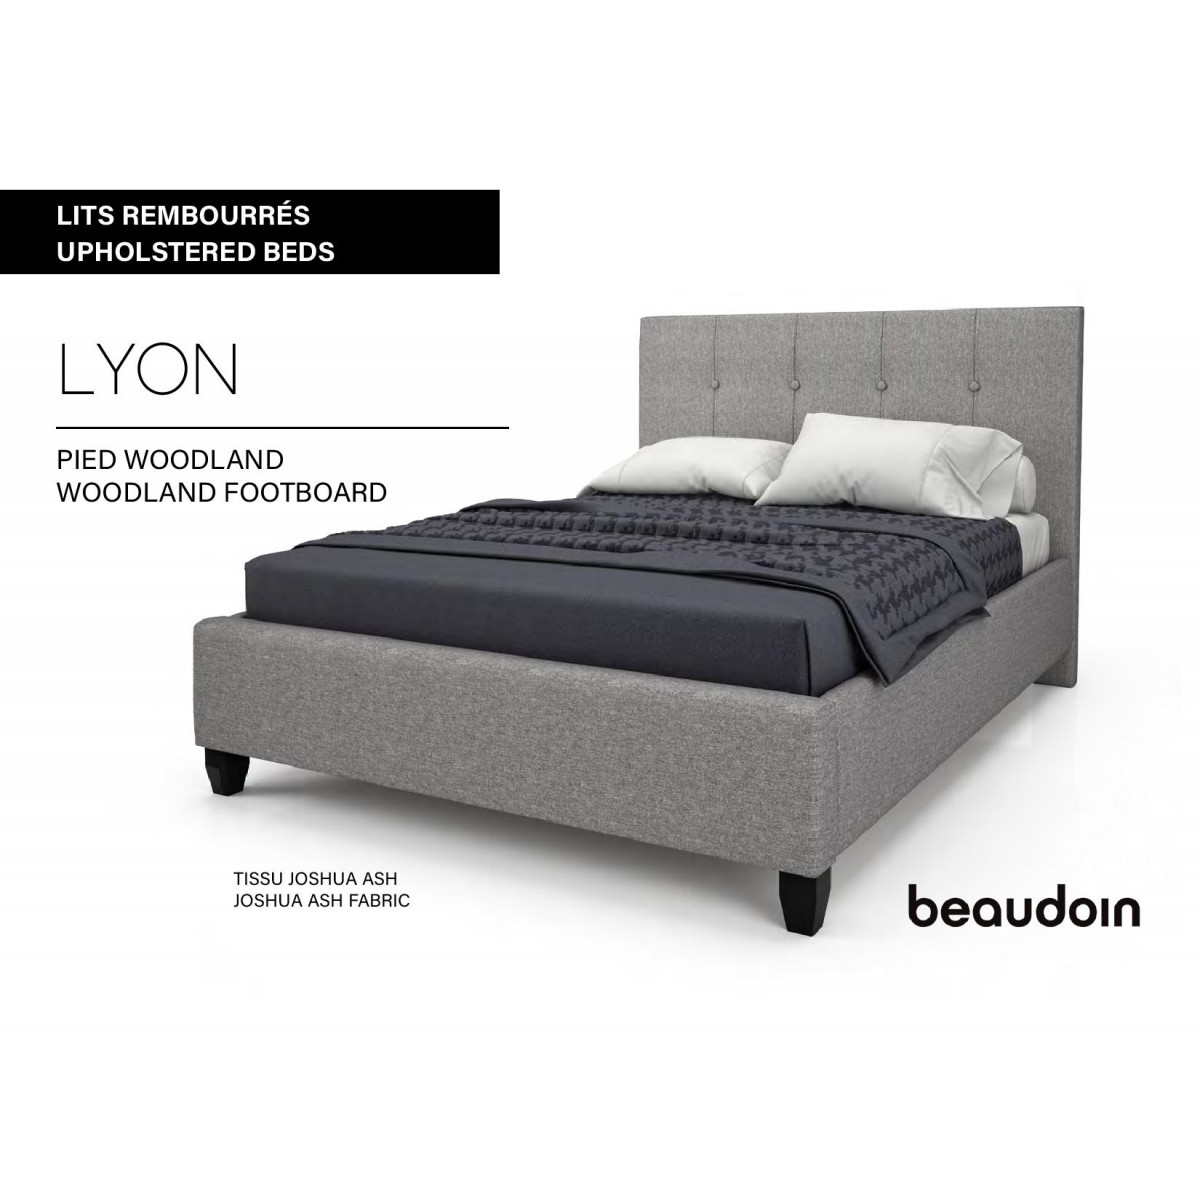 Bed Beaudoin Lyon